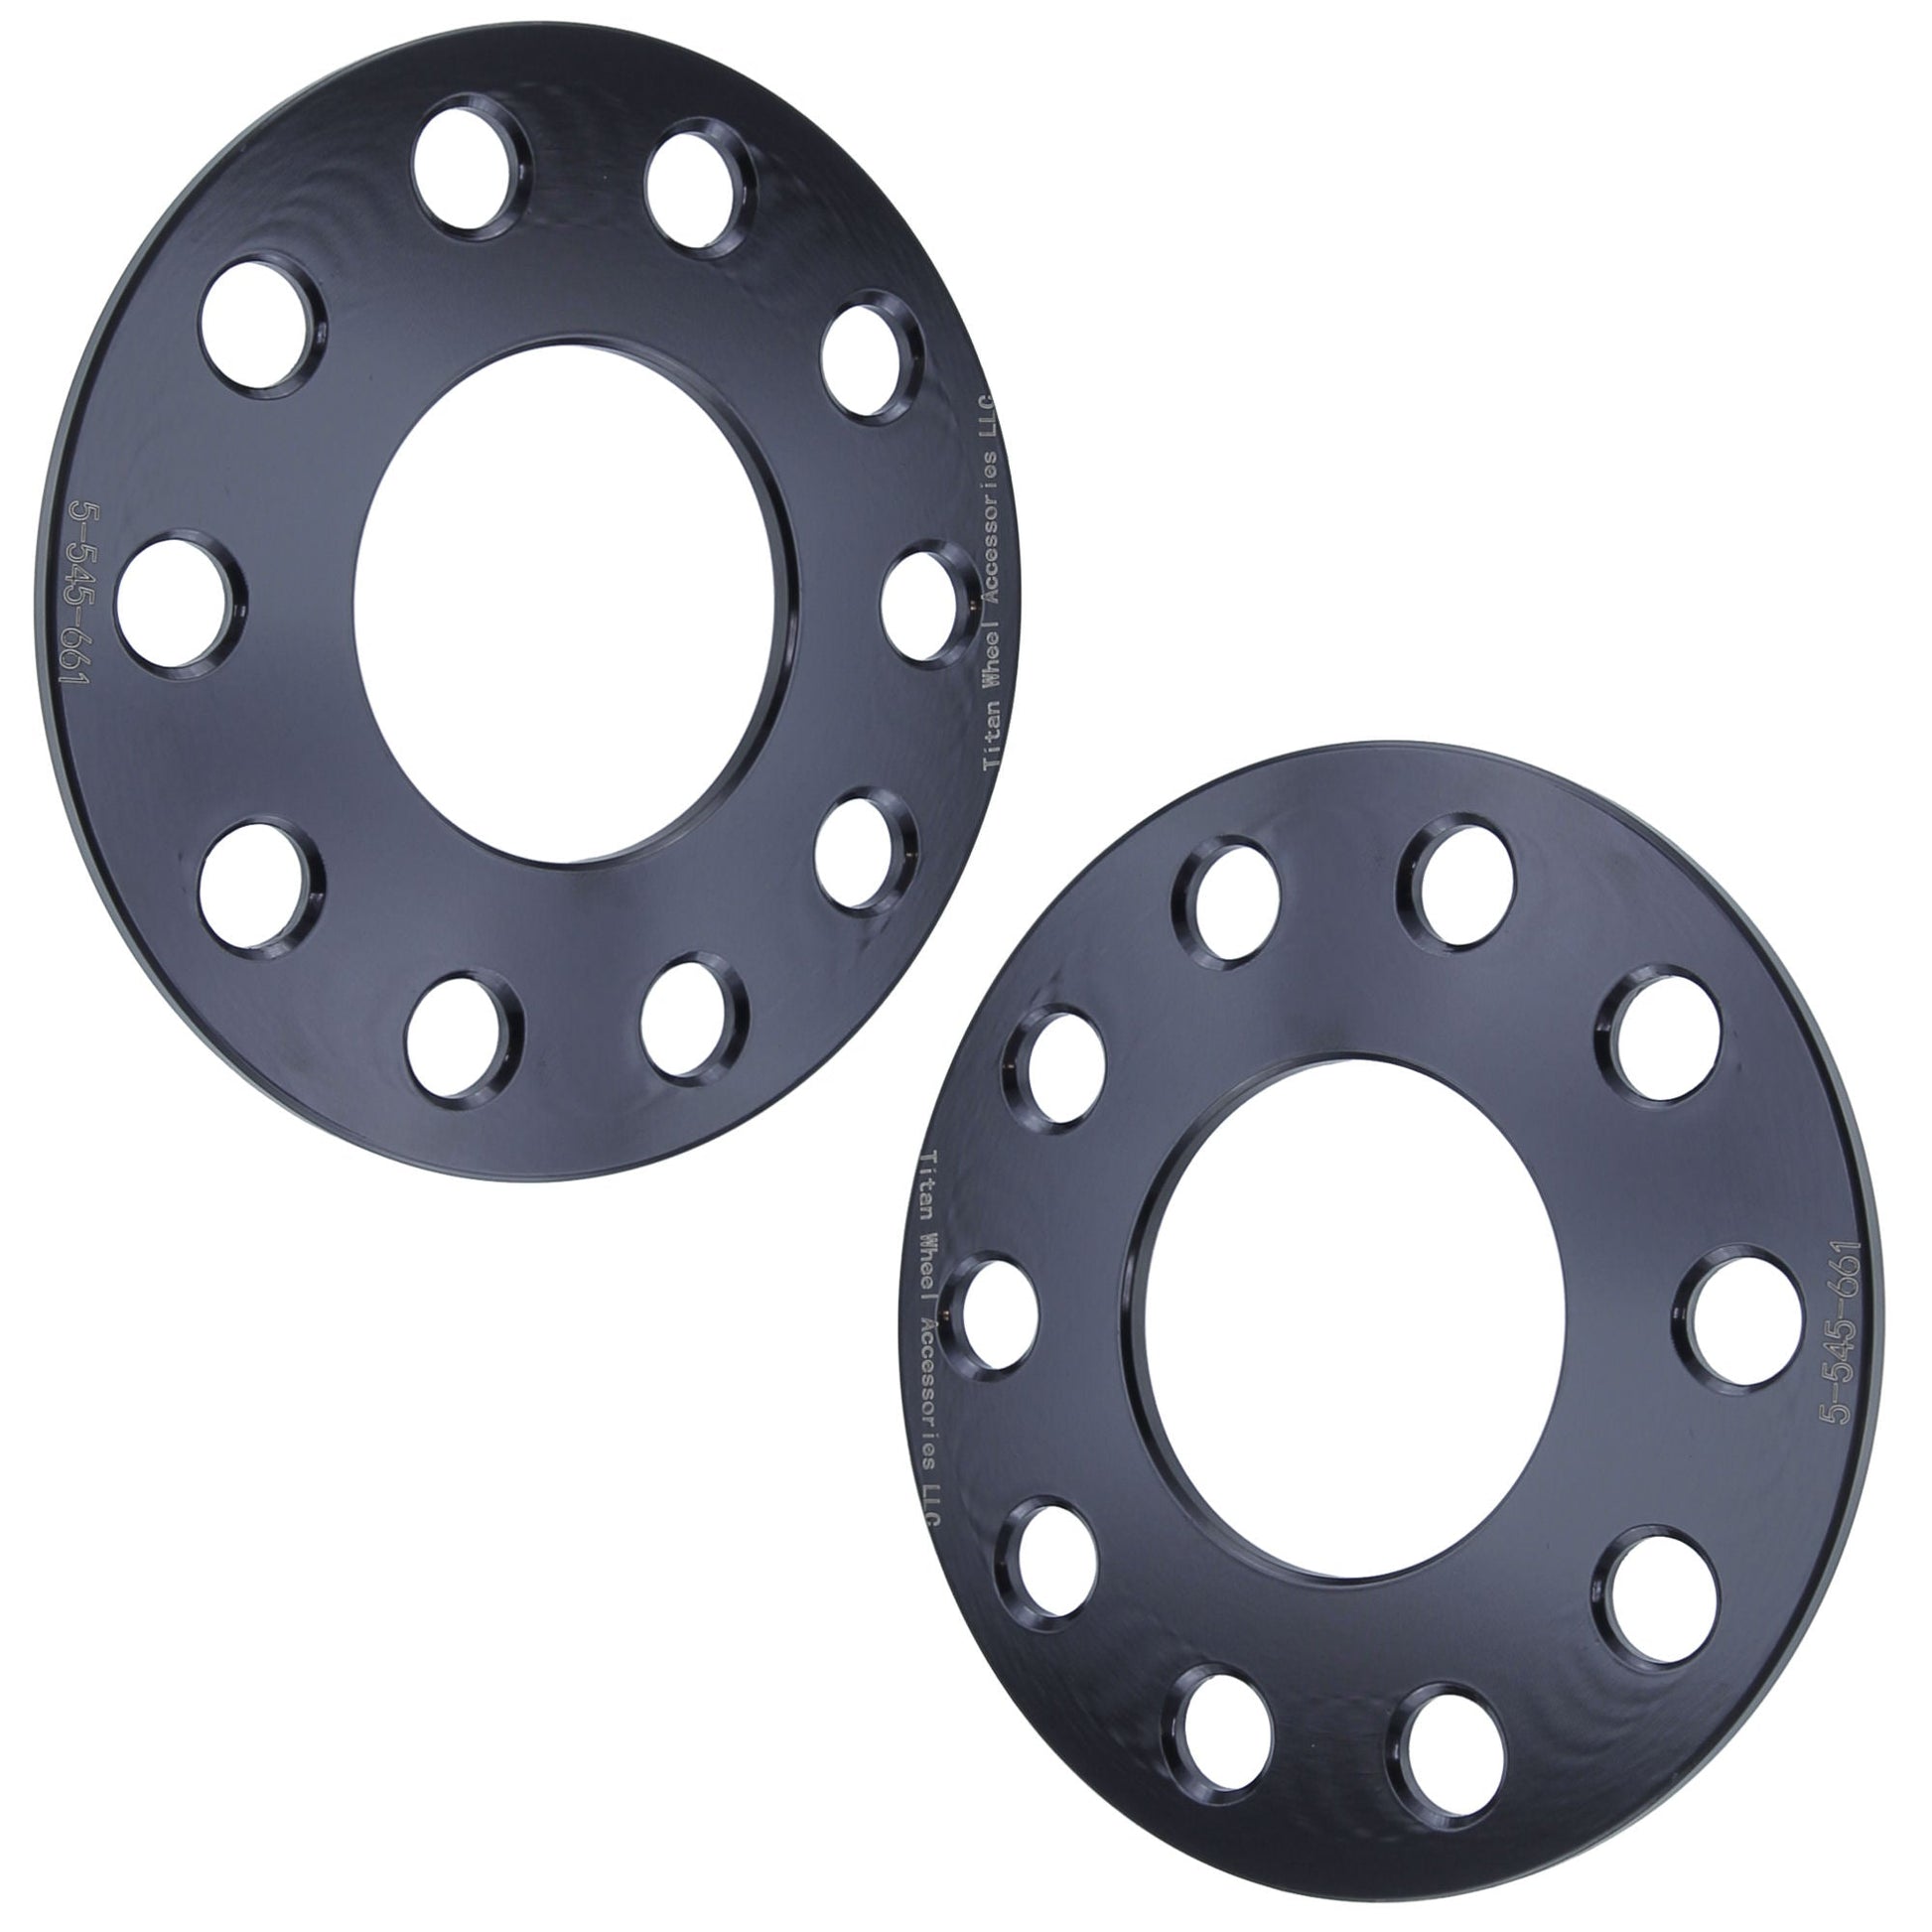 3mm Titan Wheel Spacers for Nissan Infiniti Q50 G35 G37 350z 370z Altima Maxima | 5x114.3 (5x4.5) | 66.1 Hubcentric | Titan Wheel Accessories